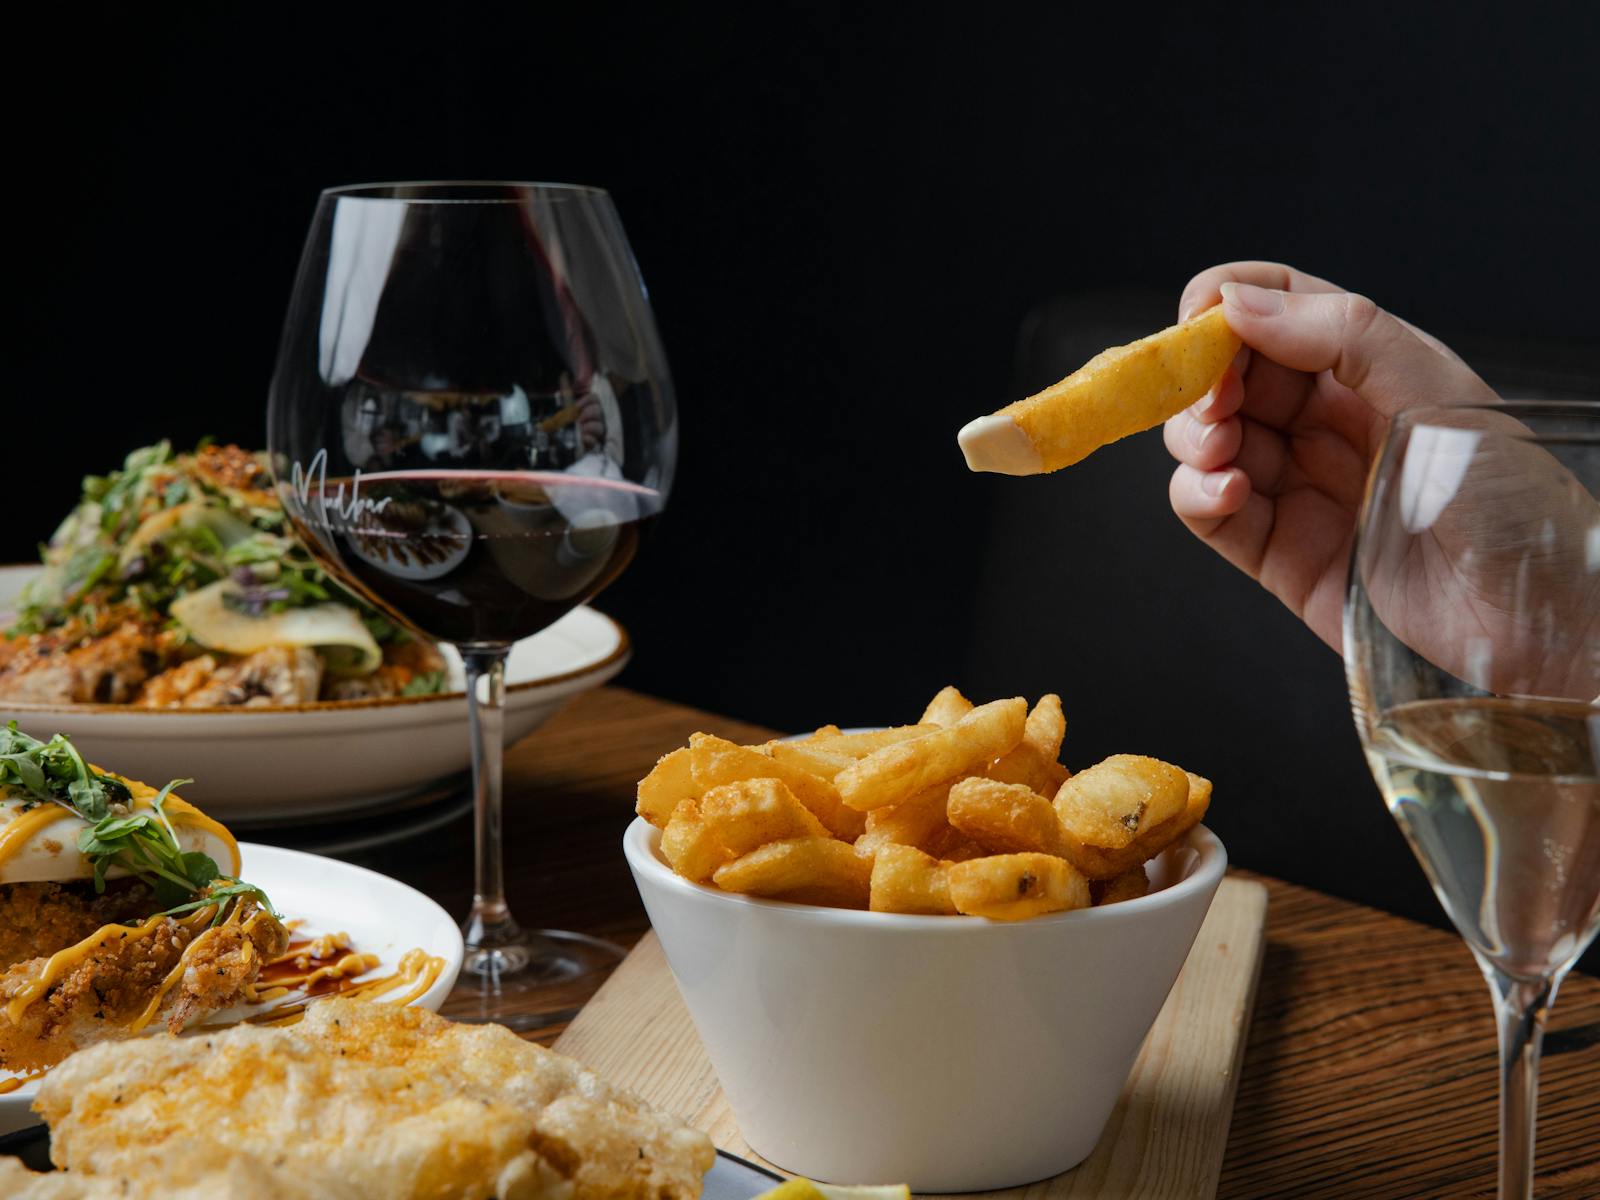 lunch in launceston - Mudbar Restaurant - pho, chips, wine, crab bao